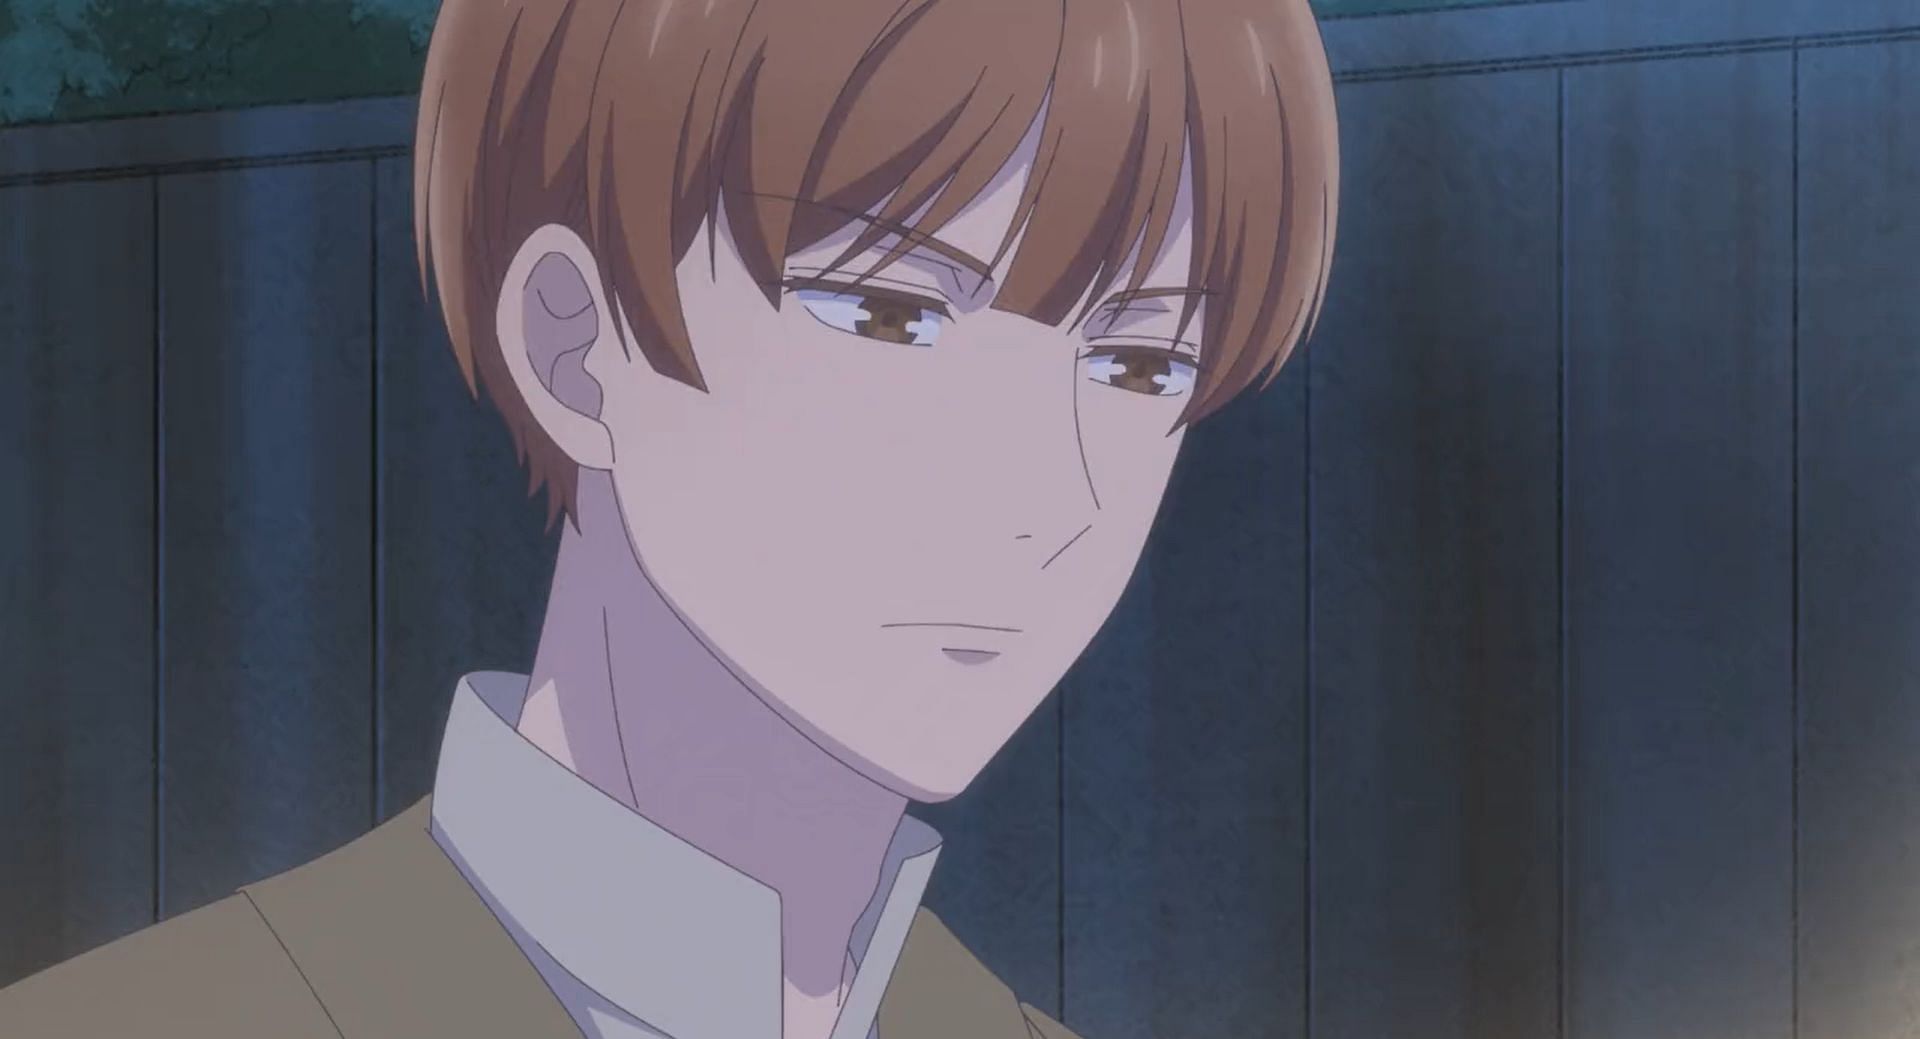 Kazuhiko as seen in the anime (Image via Studio DEEN)